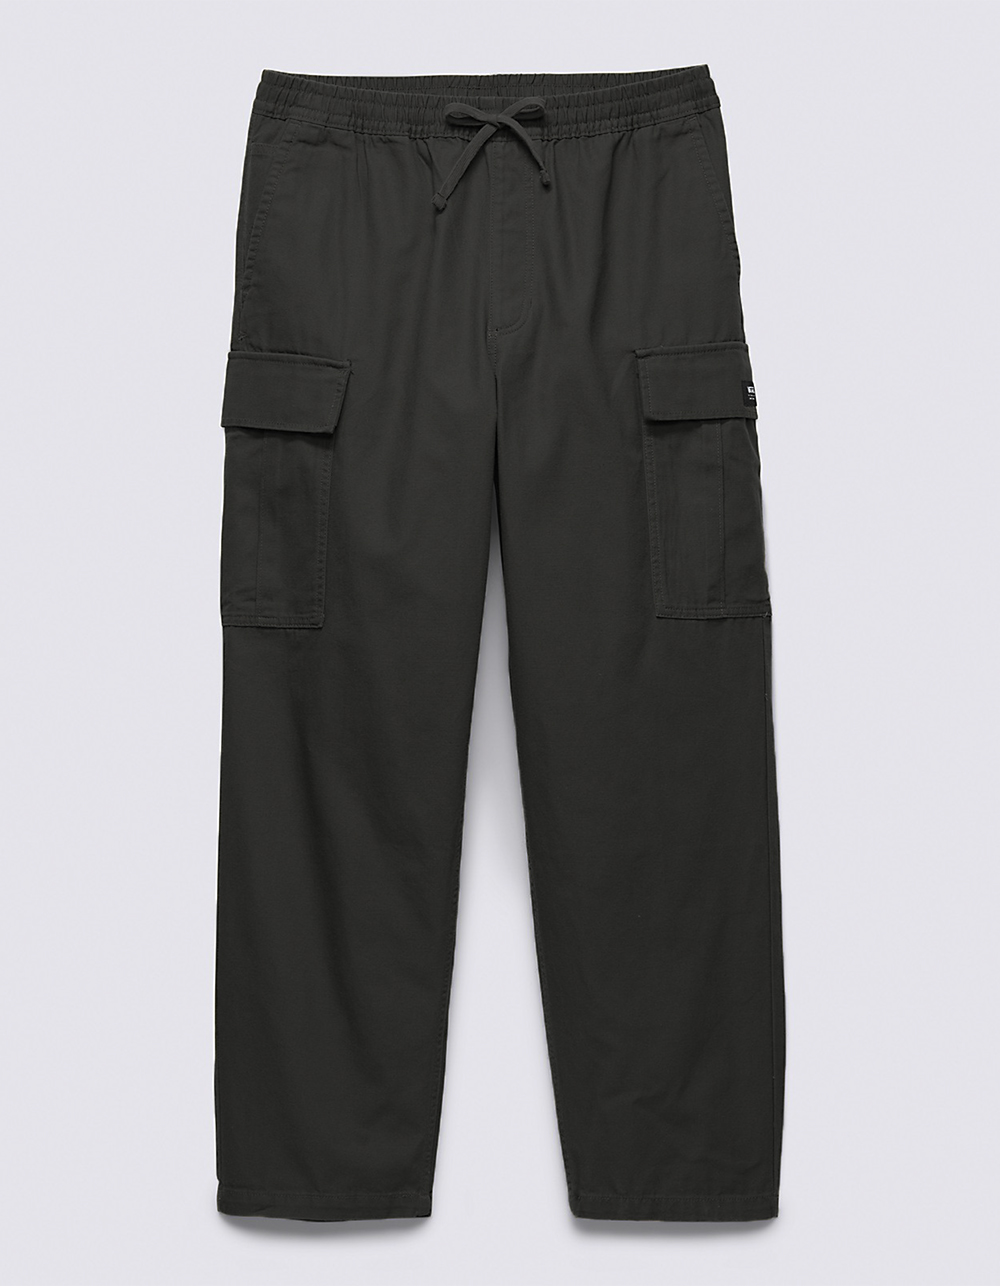  RANGE CARGO BAGGY TAPERED ELASTIC PANT GRAPE LEAF/LODEN  GREEN - men's trousers - VANS - 61.83 € - outdoorové oblečení a vybavení  shop